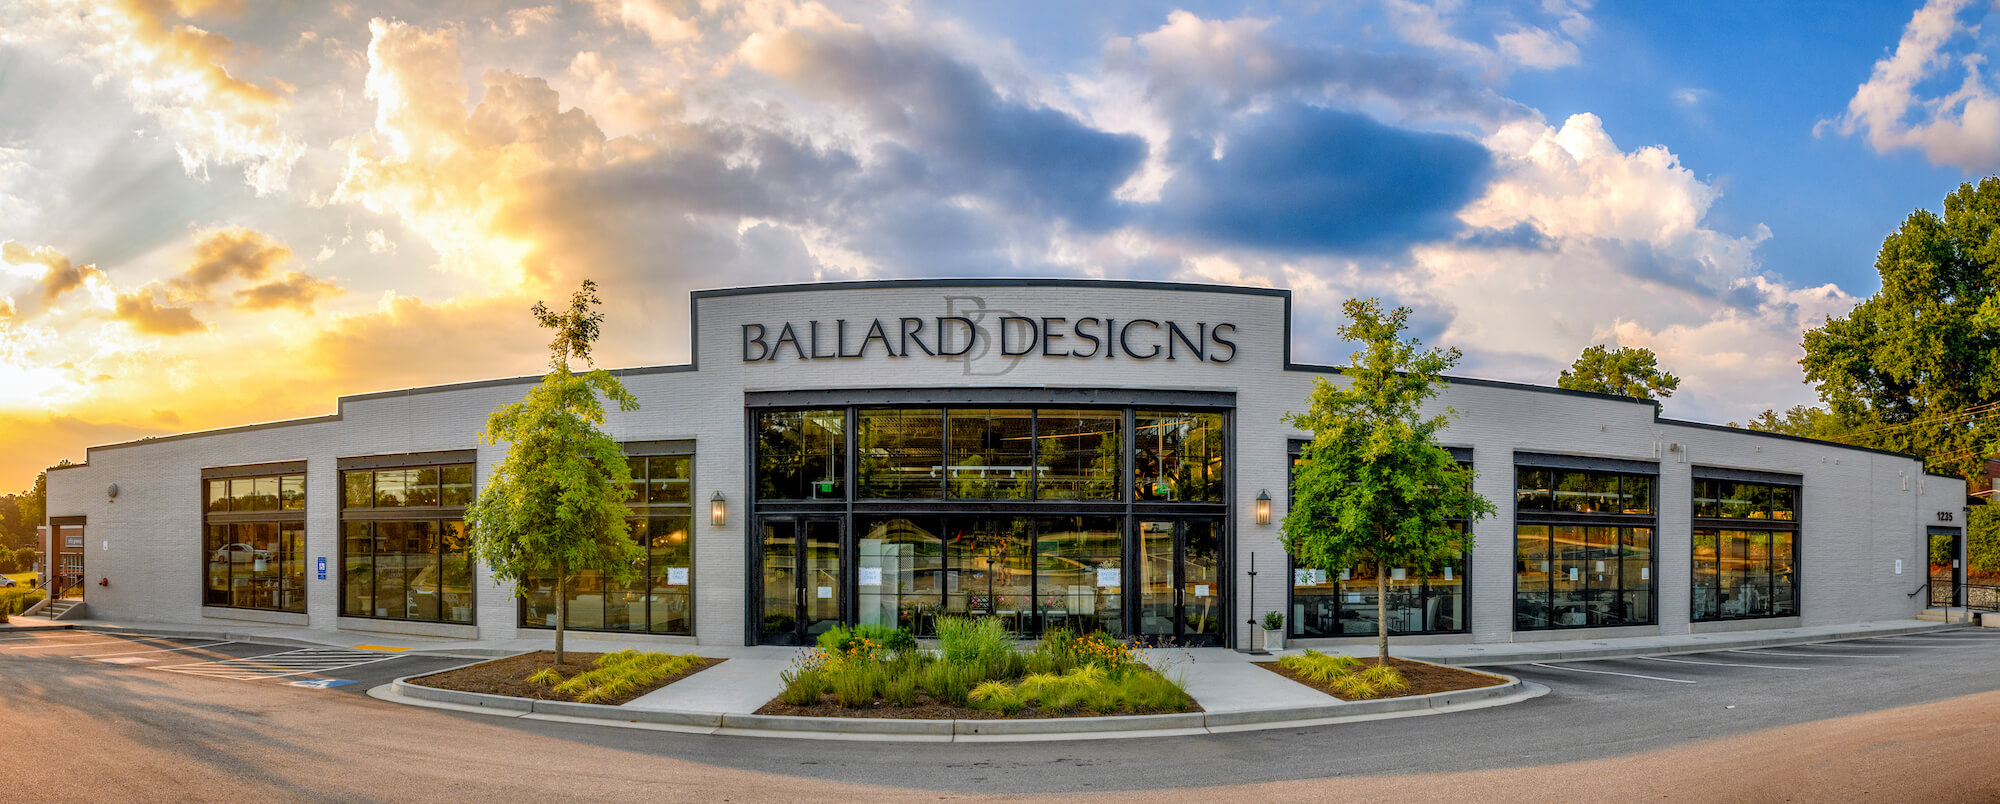 14 New Ballard designs outlet tampa for Remodeling Design